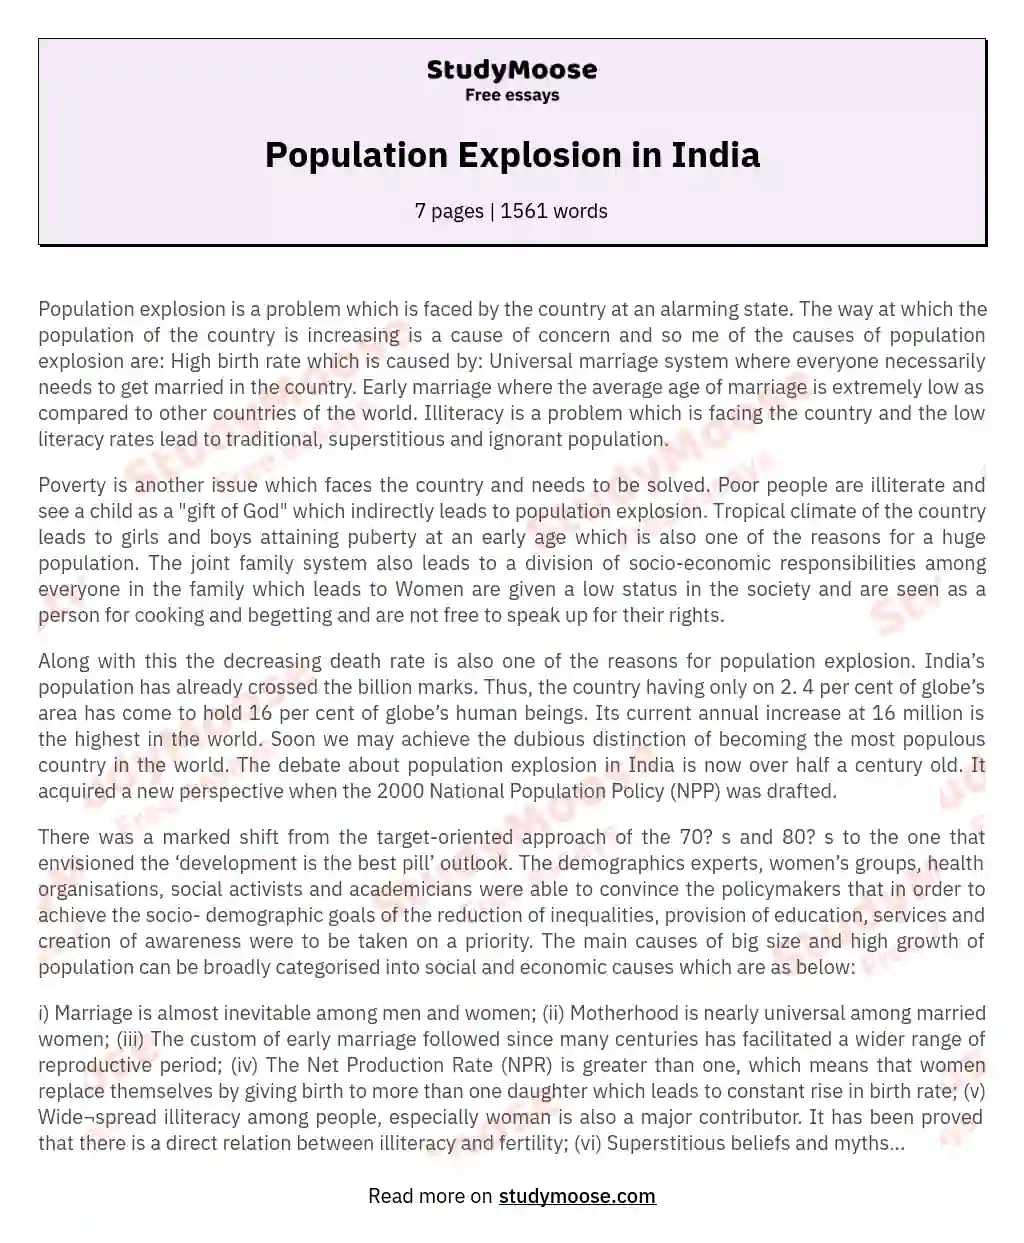 Population Explosion in India essay